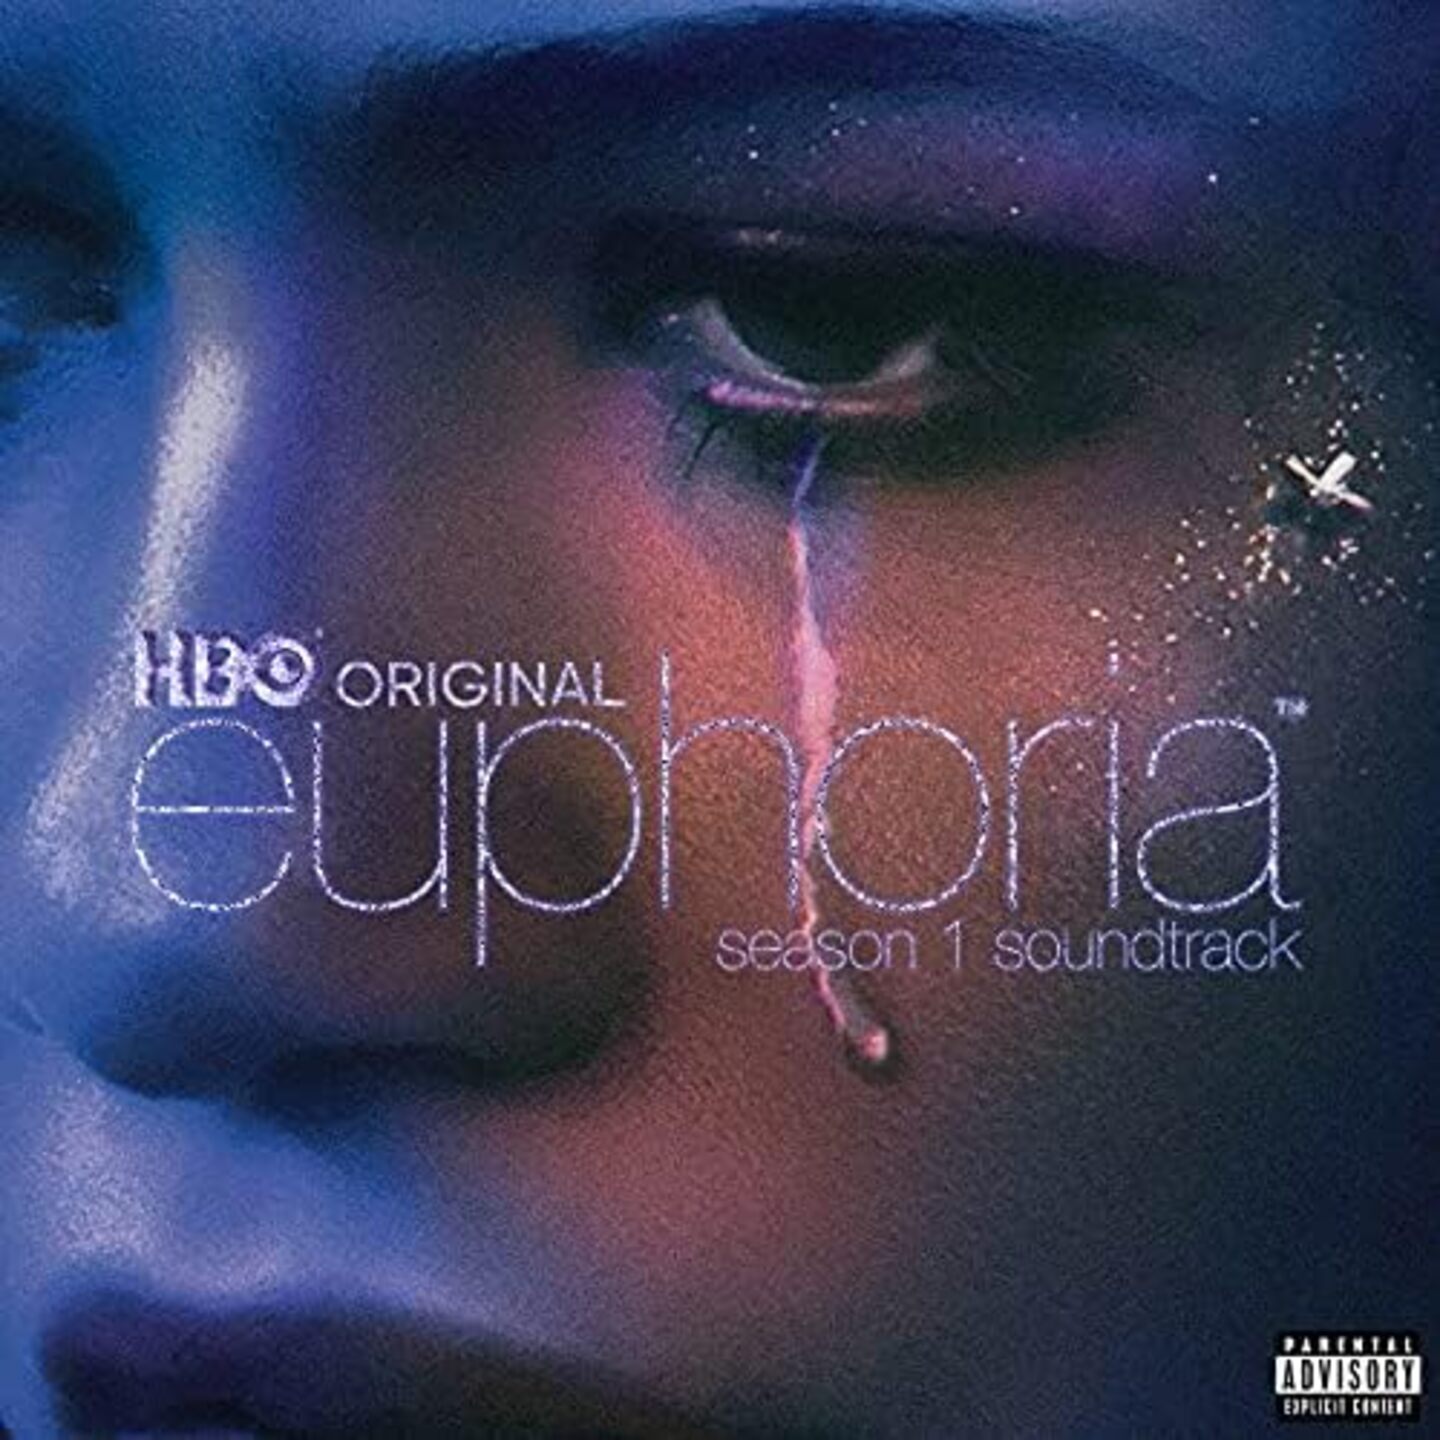 V/A - Euphoria: Season 1 Soundtrack LP (Purple Vinyl)